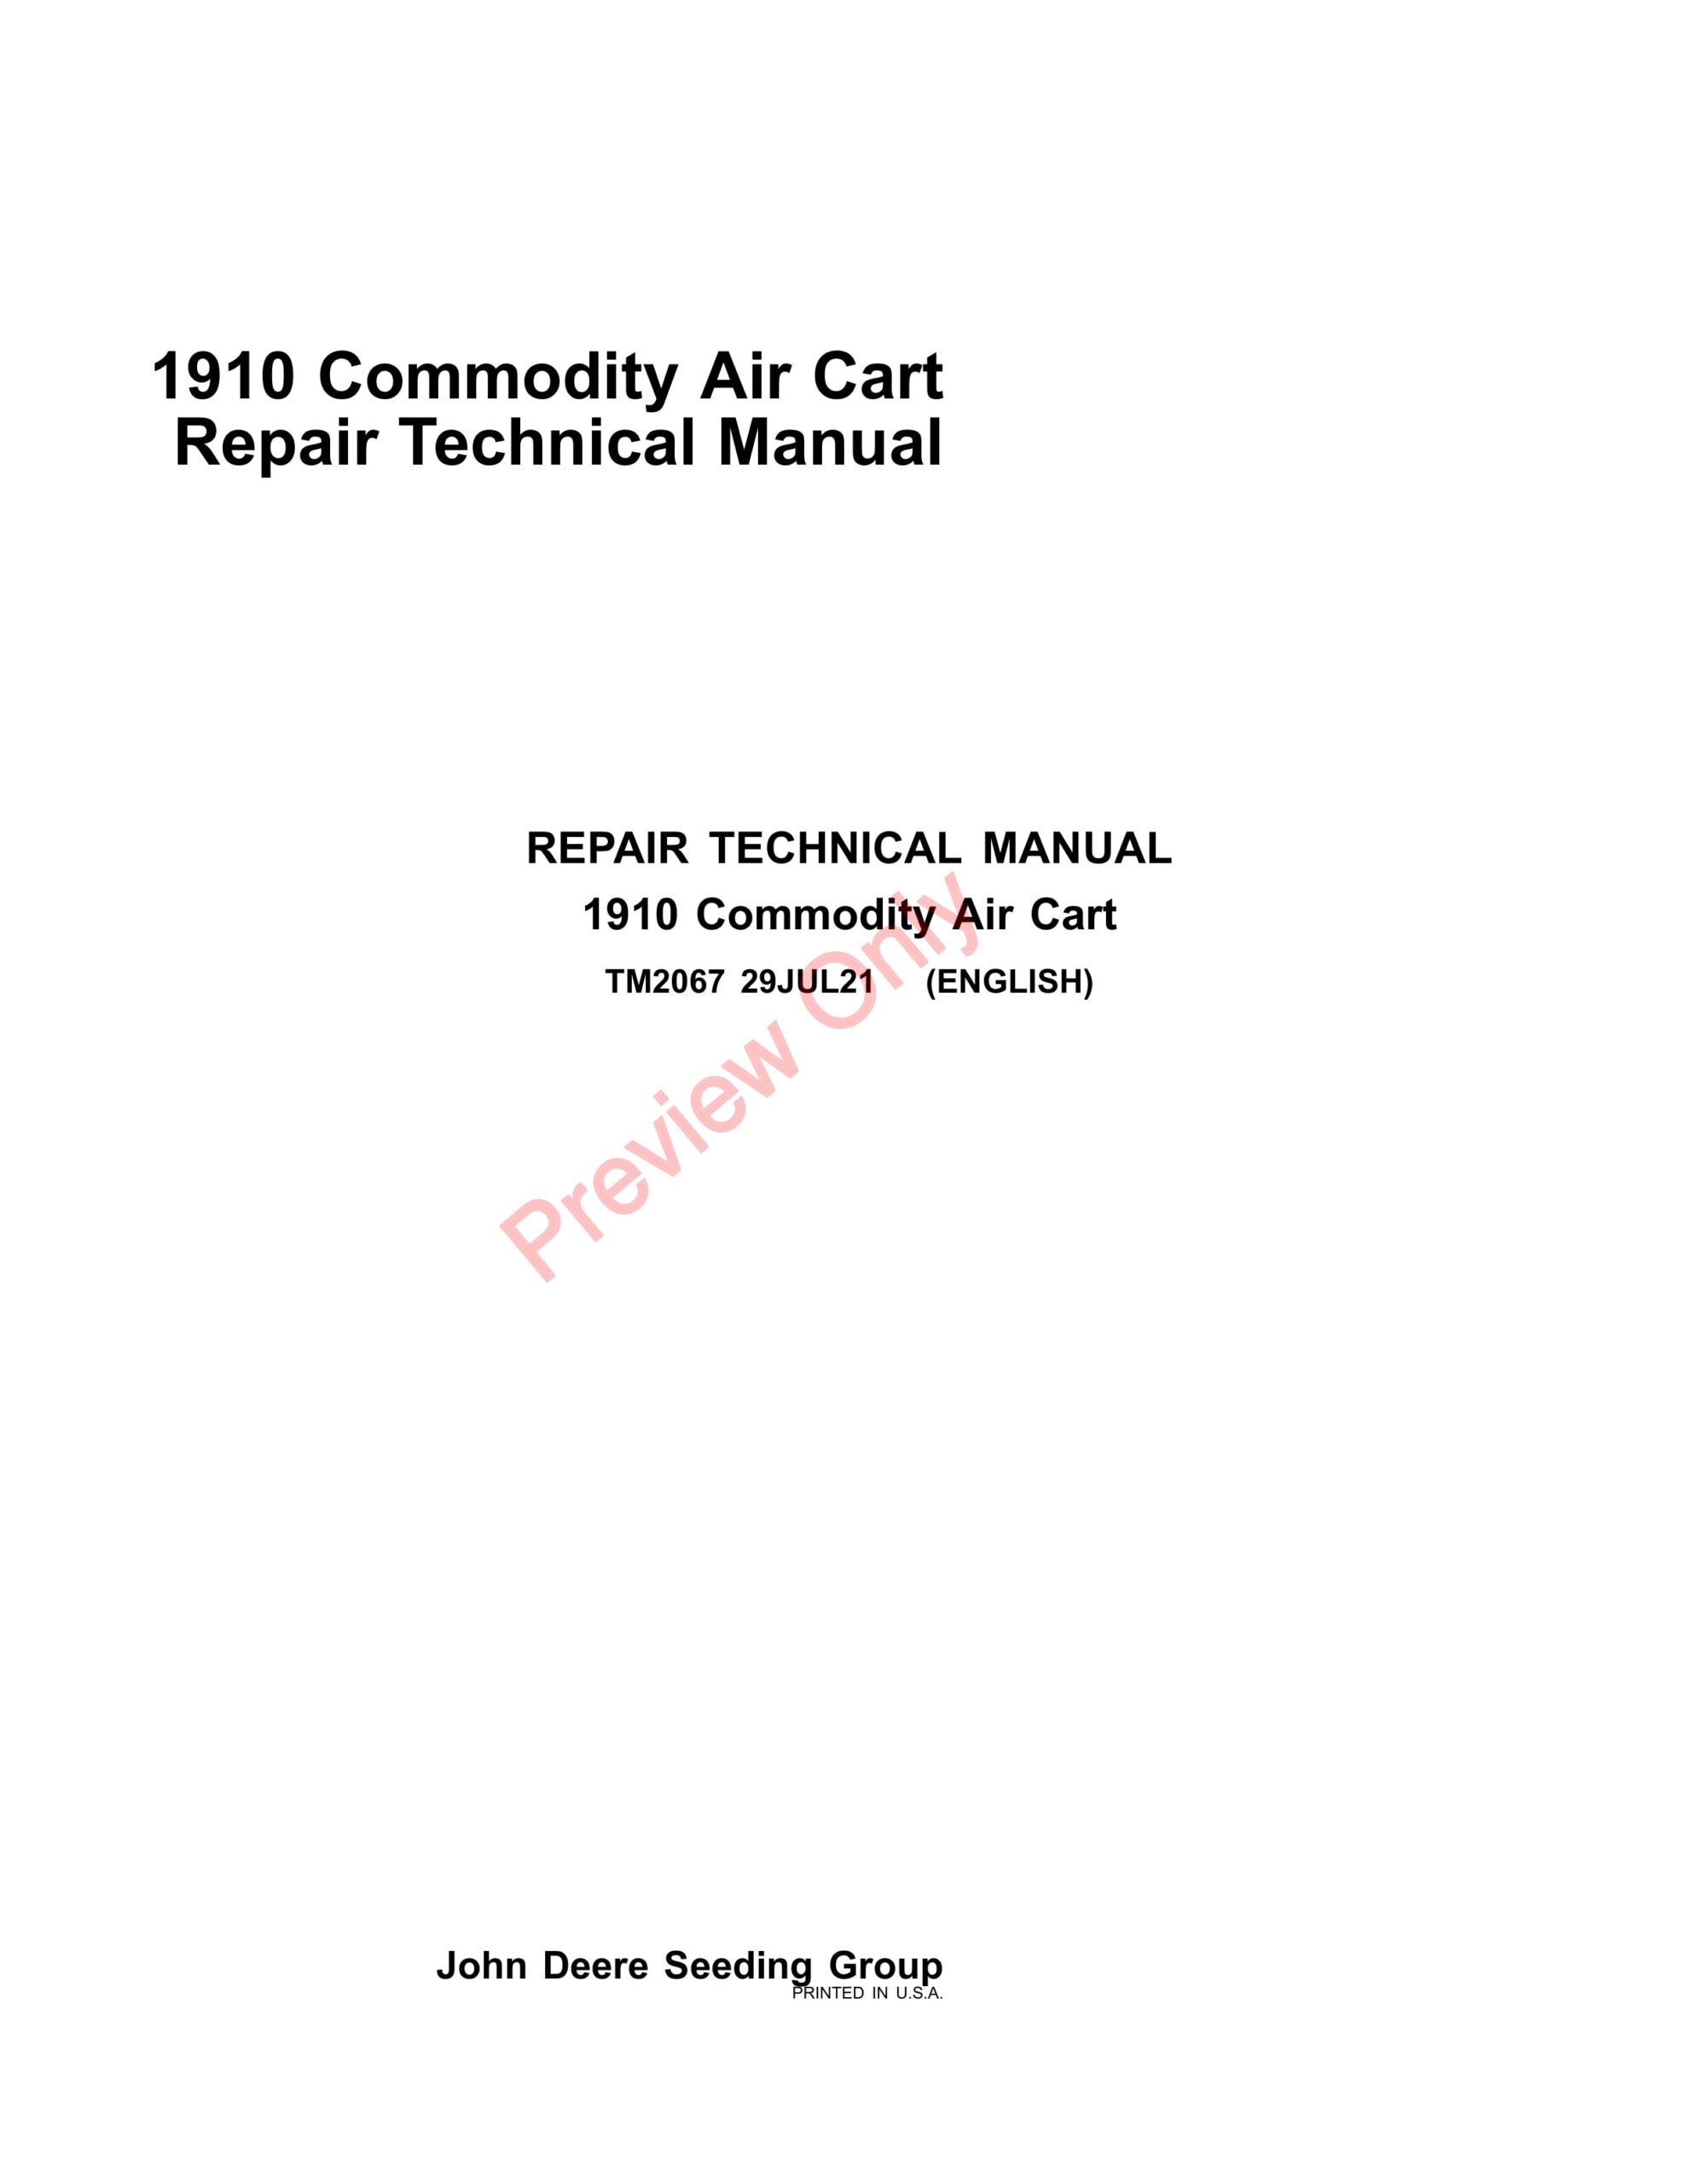 John Deere 1910 Commodity Air Cart Repair Technical Manual TM2067 29JUL21-1